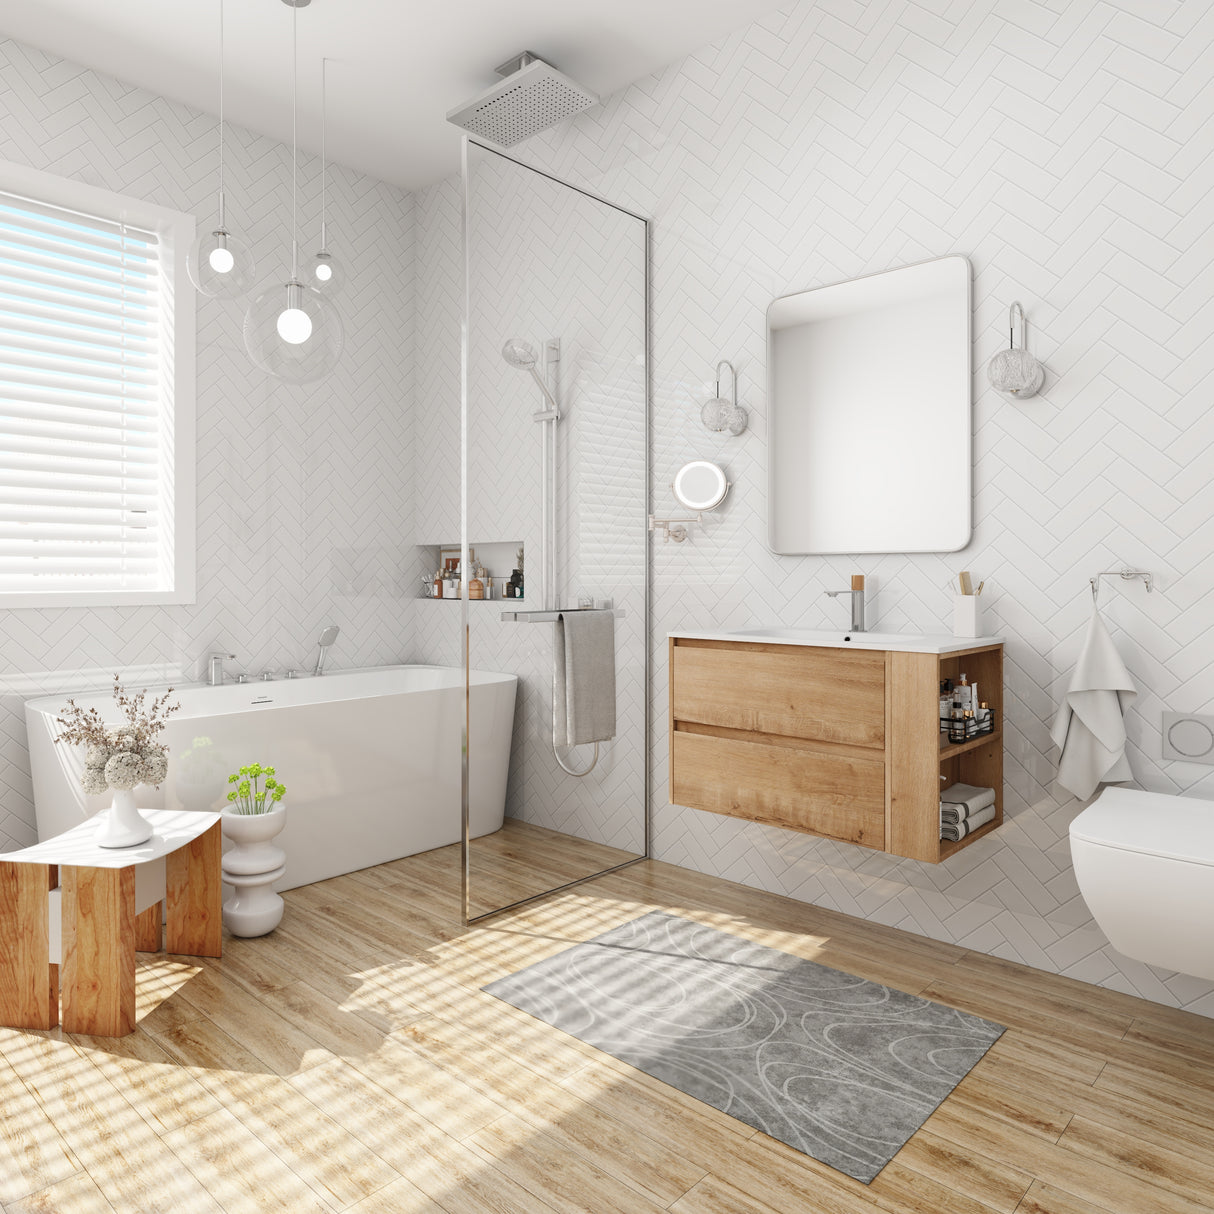 30” Wall Mounting Bathroom Vanity With Gel Sink(BVB05530IMO)